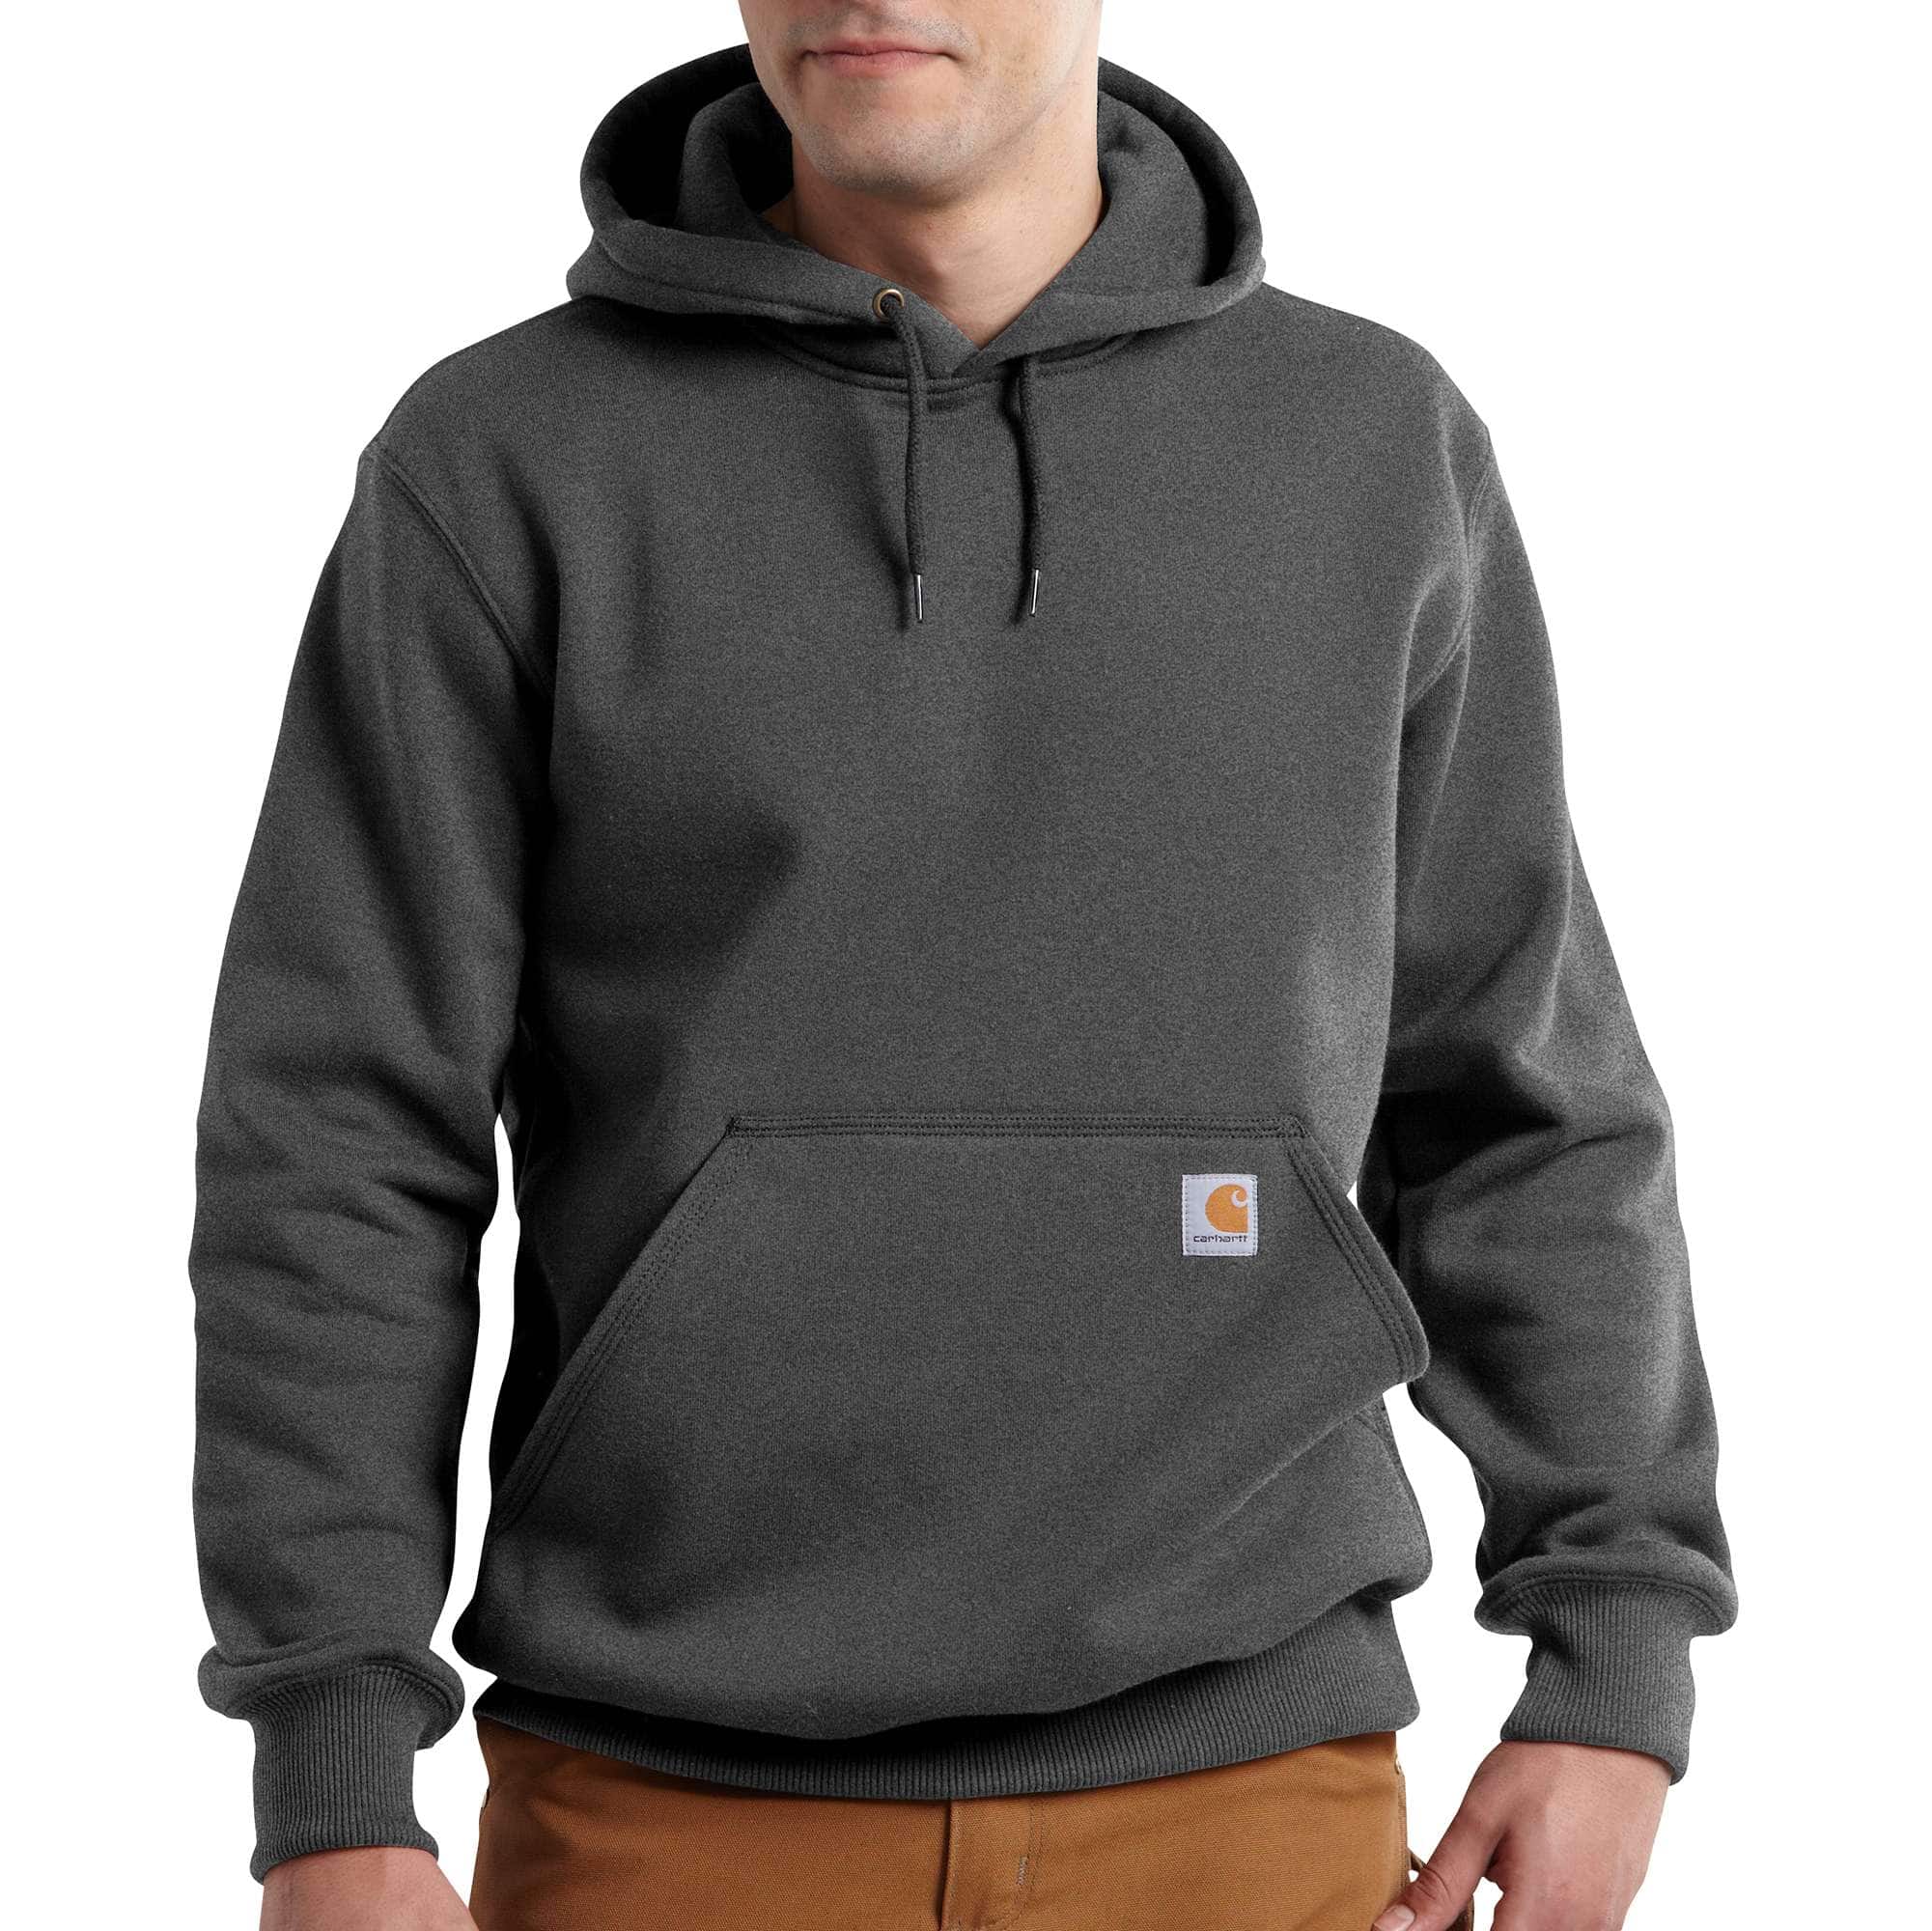 Extra Heavy Duty Hooded Sweatshirt Flash Sales, 56% OFF | www 